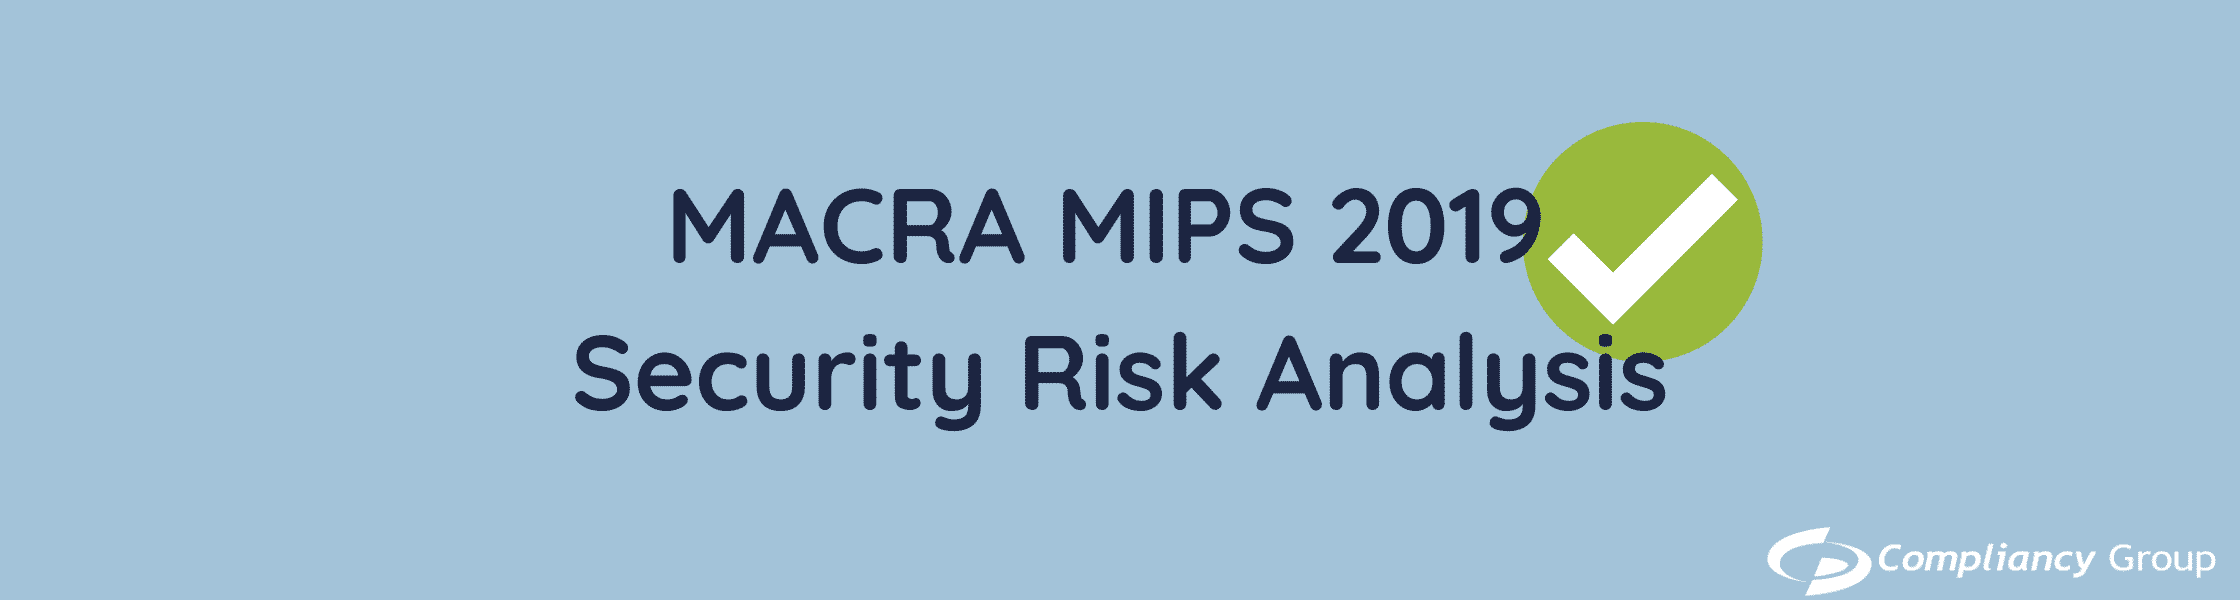 MACRA MIPS 2019 Security Risk Analysis